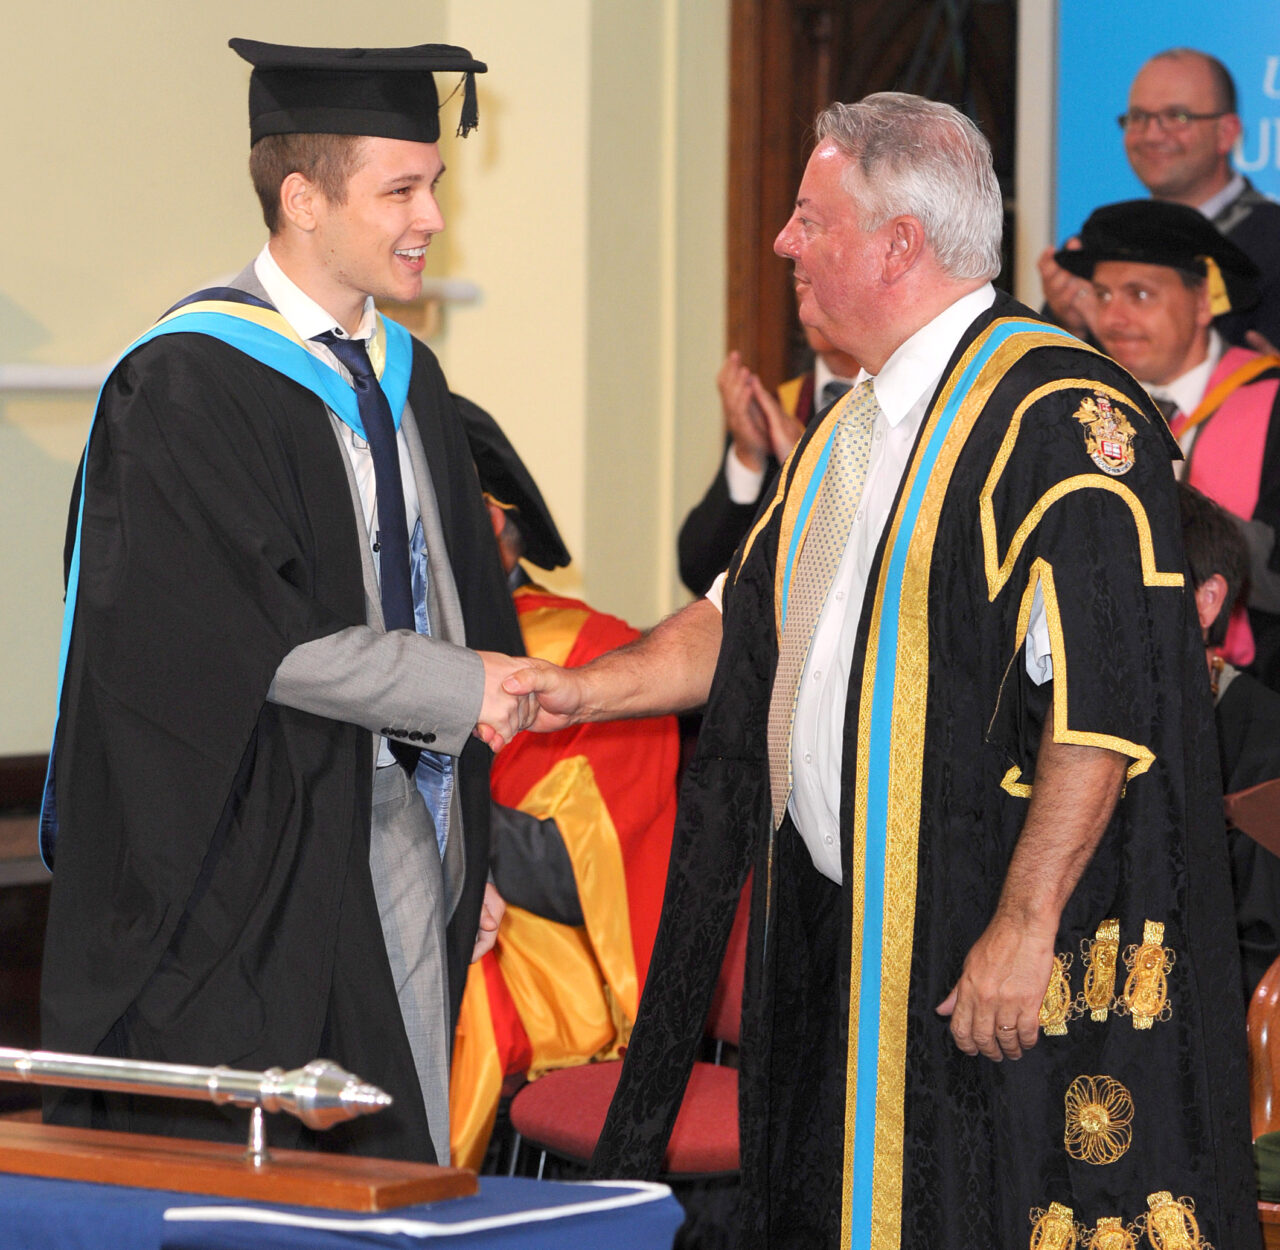 Nathan Winch graduates university